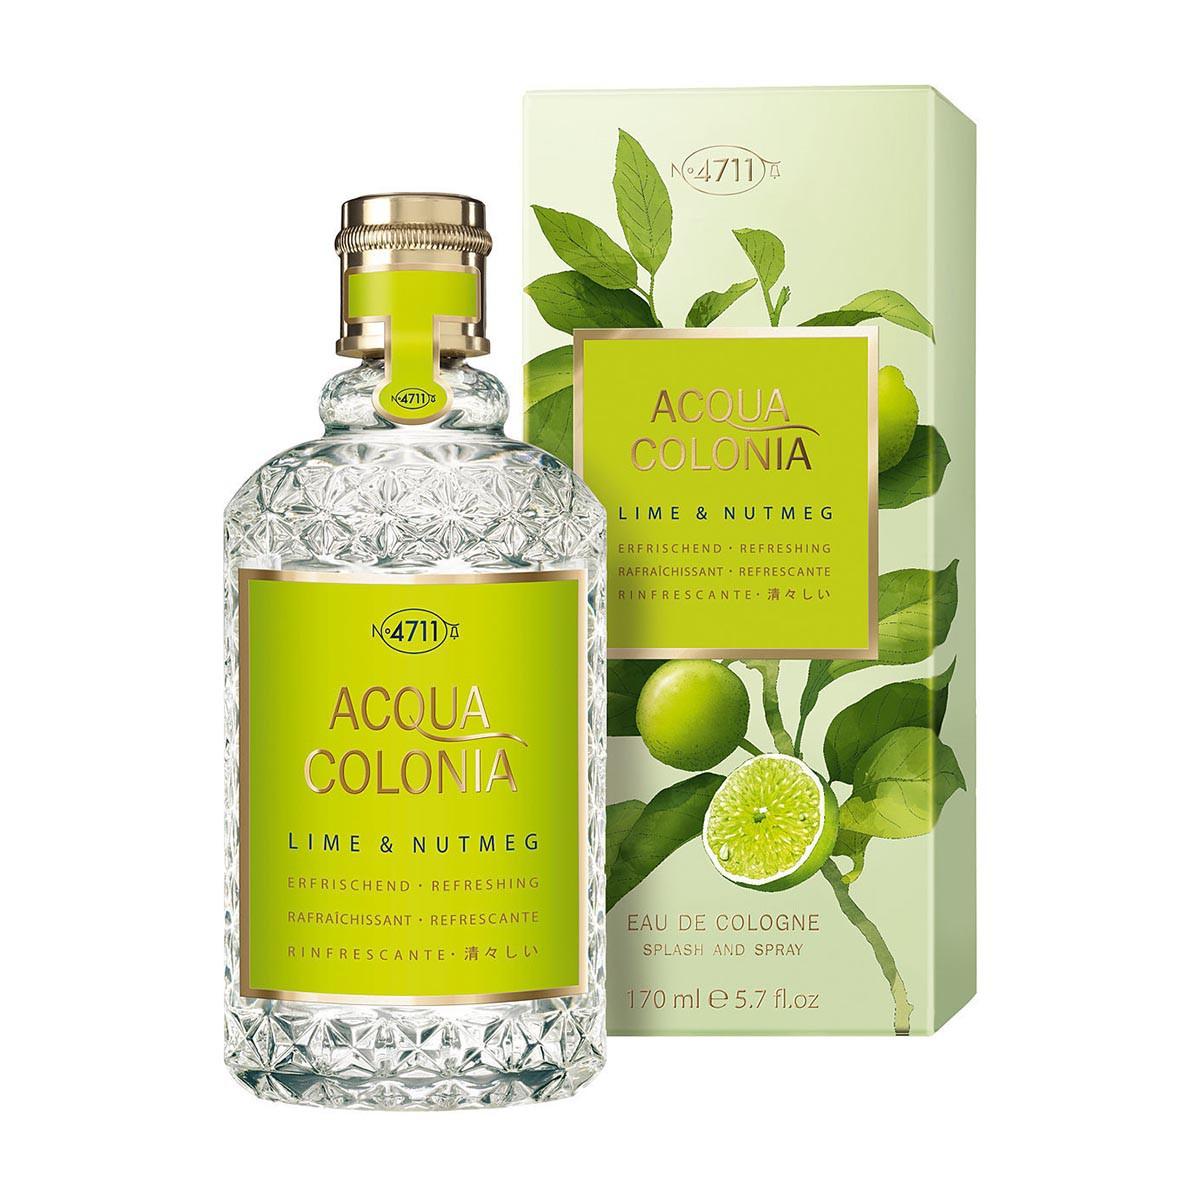 4711-fragrances-acqua-colonia-lime-nutmeg-natural-spray-eau-de-cologne-170ml-parfum